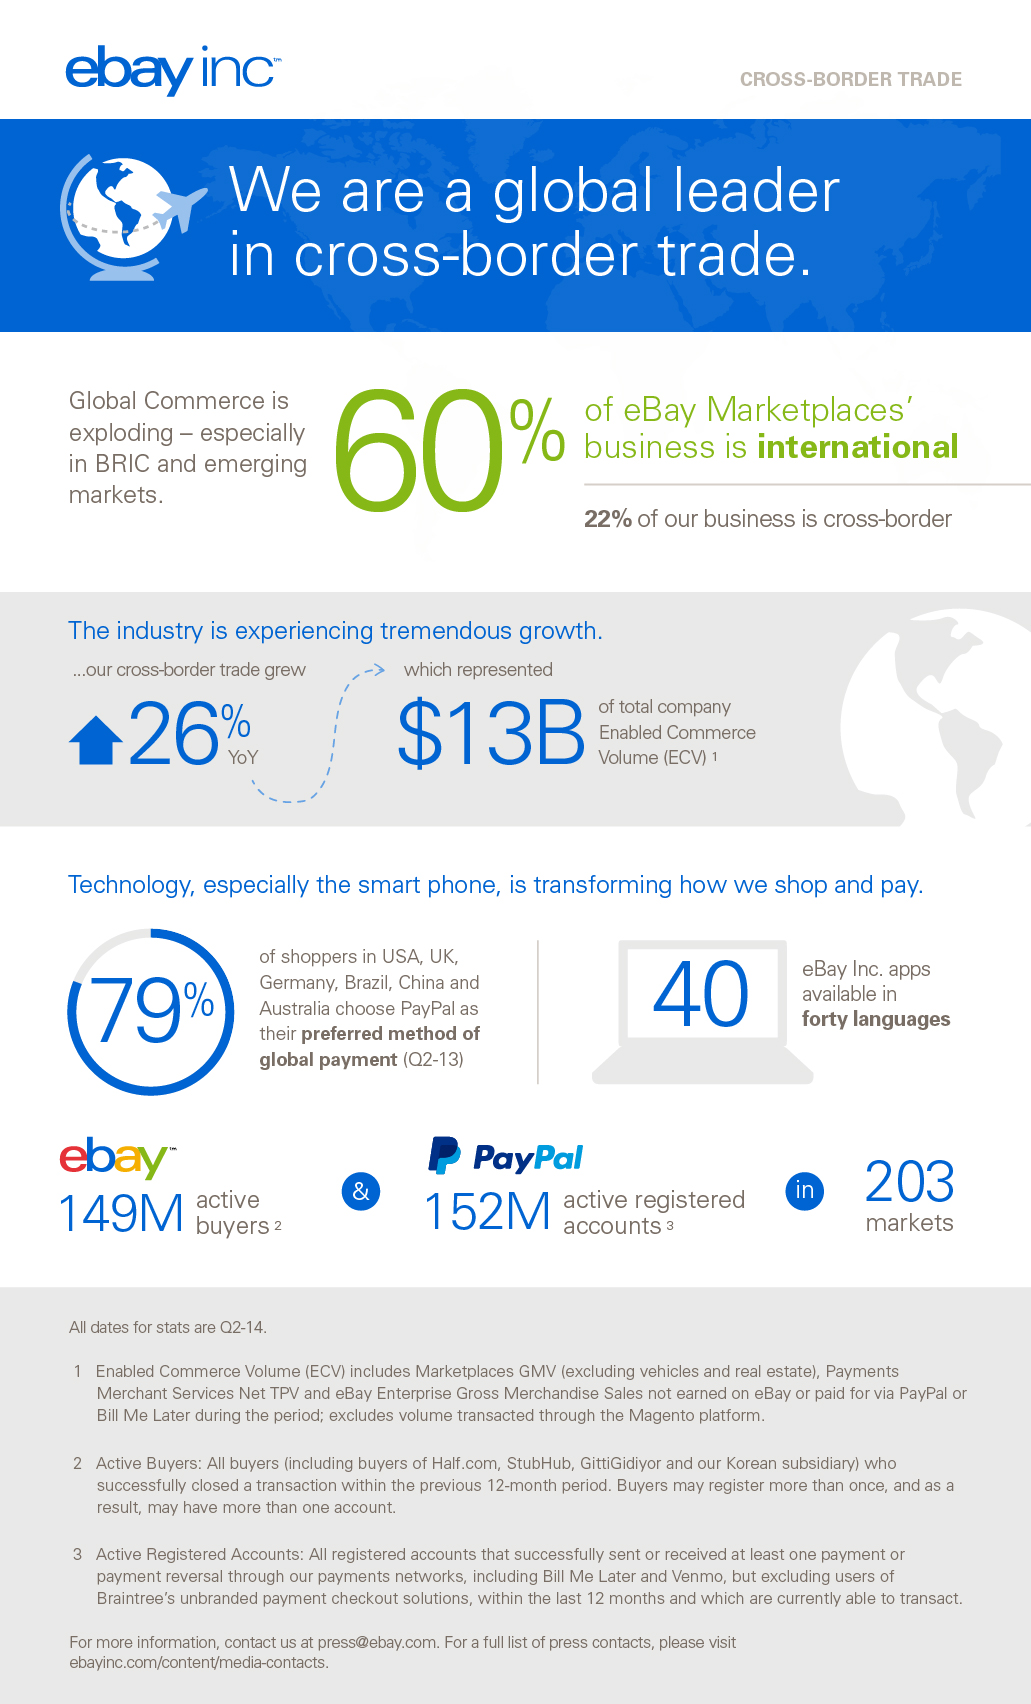 Cross Border Trade represents 22 percent of eBay Inc's Business